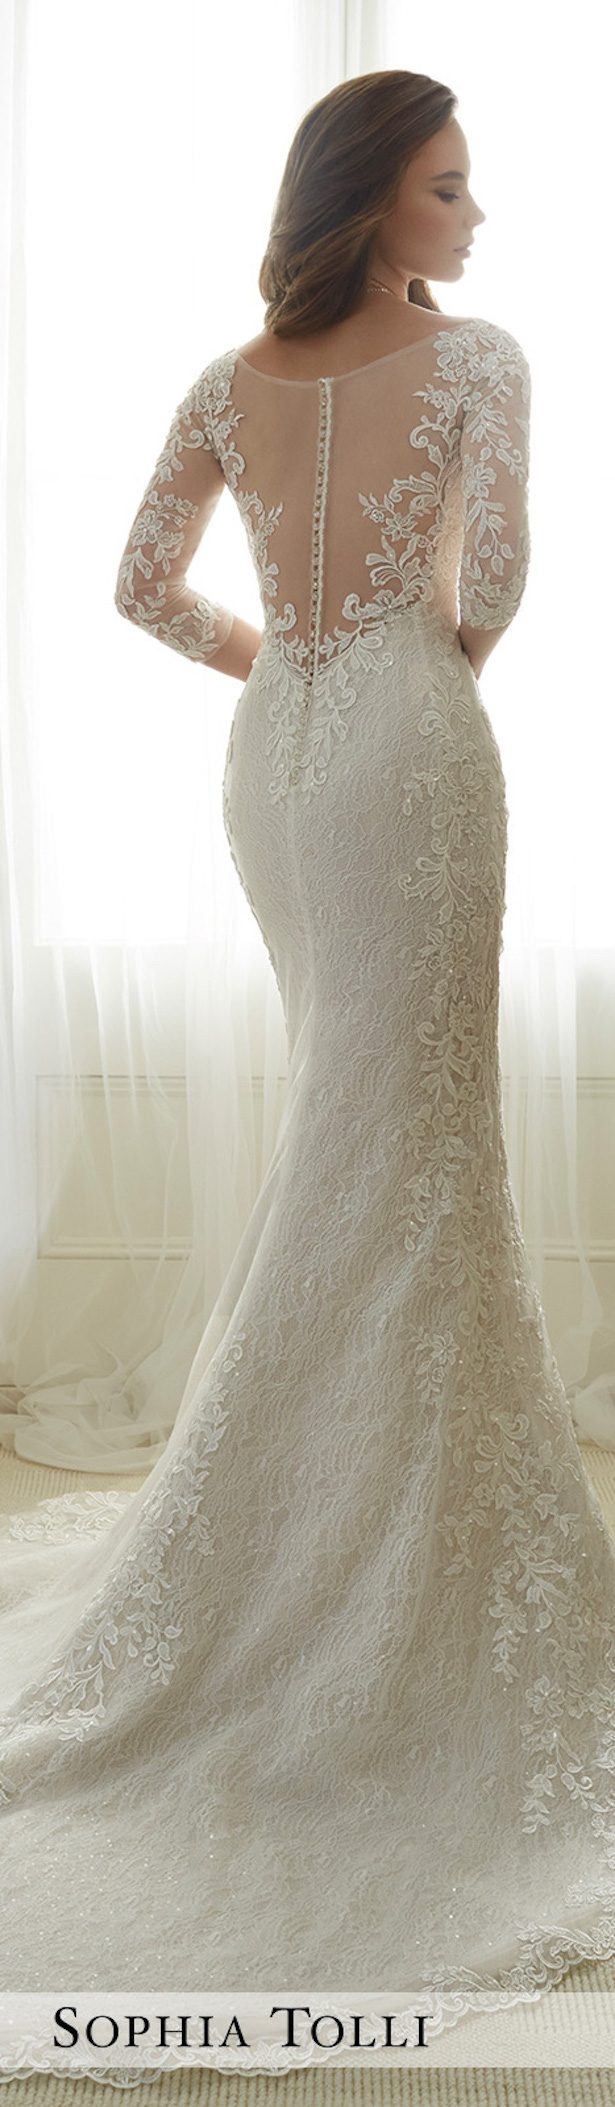 sophia tolli long sleeve wedding dresses